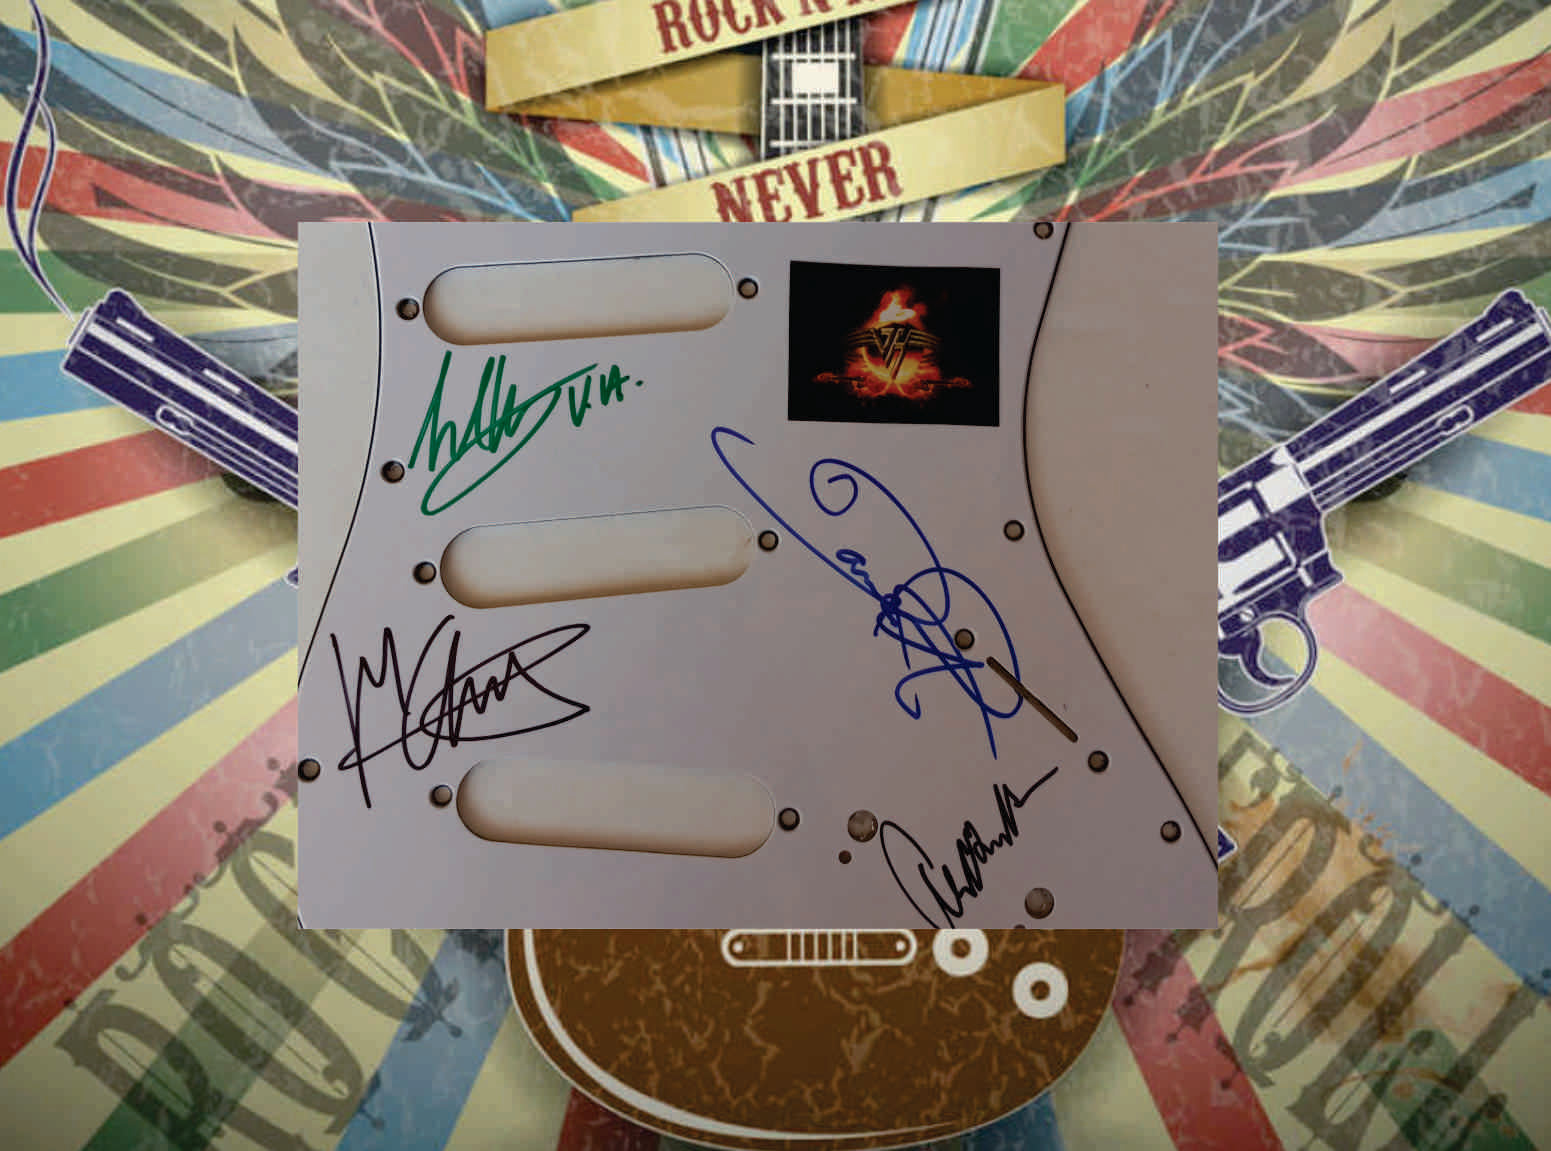 Eddie Van Halen, David Lee Roth, Michael Anthony, Allex Van Halen guitar pickguard signed with proof